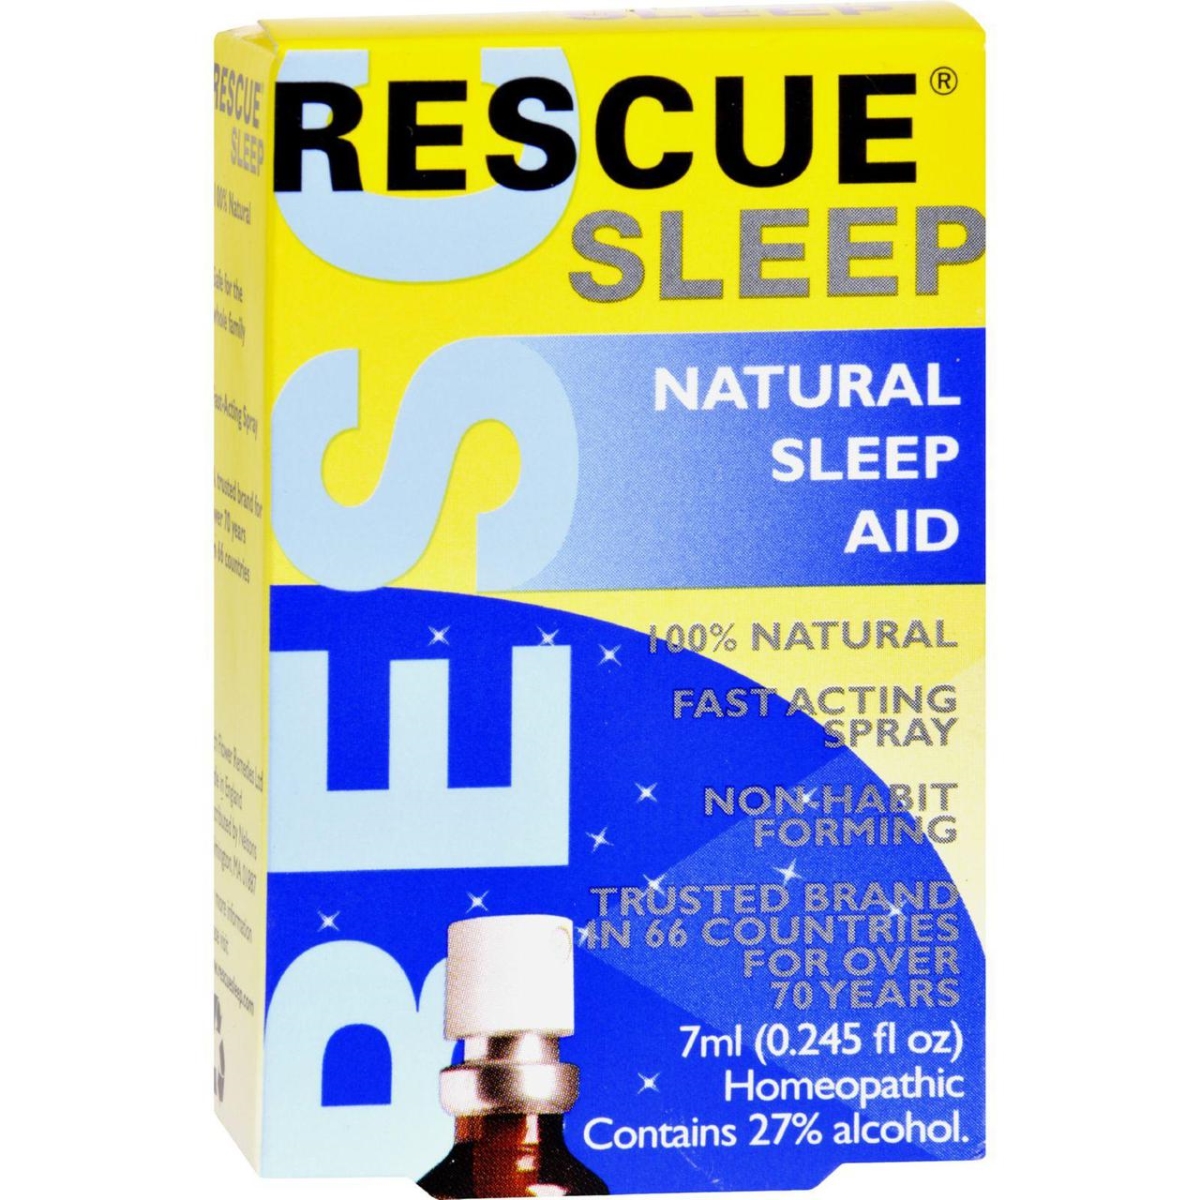 Hg0800771 7 Ml Rescue Remedy Sleep